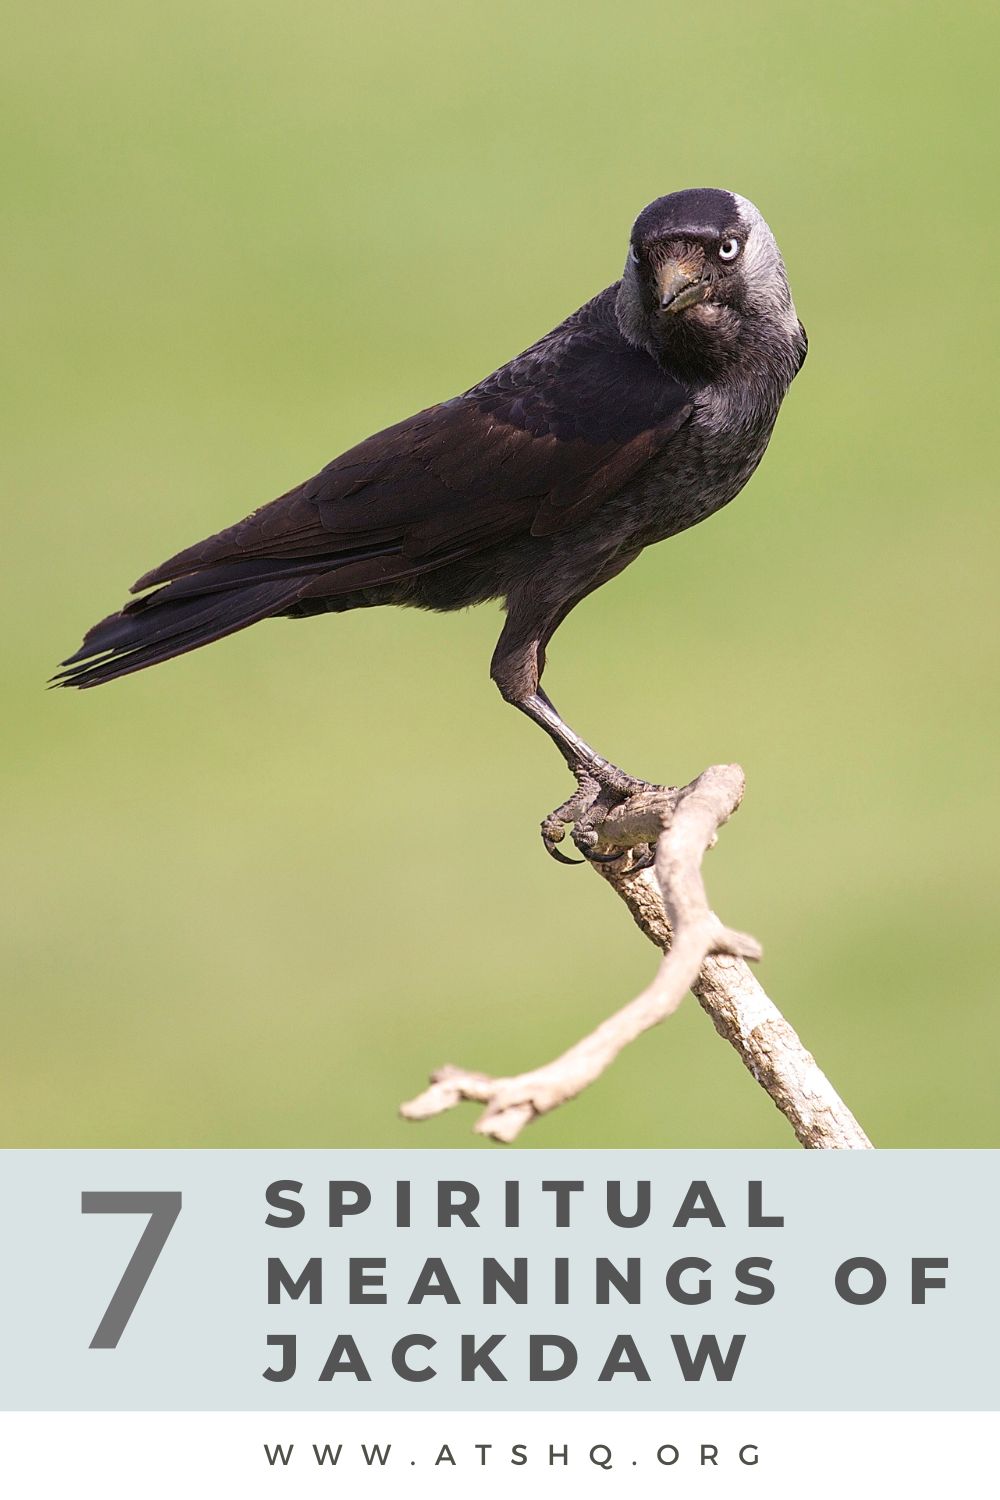 Jackdaw Symbolism: 7 Spiritual Meanings of Jackdaw